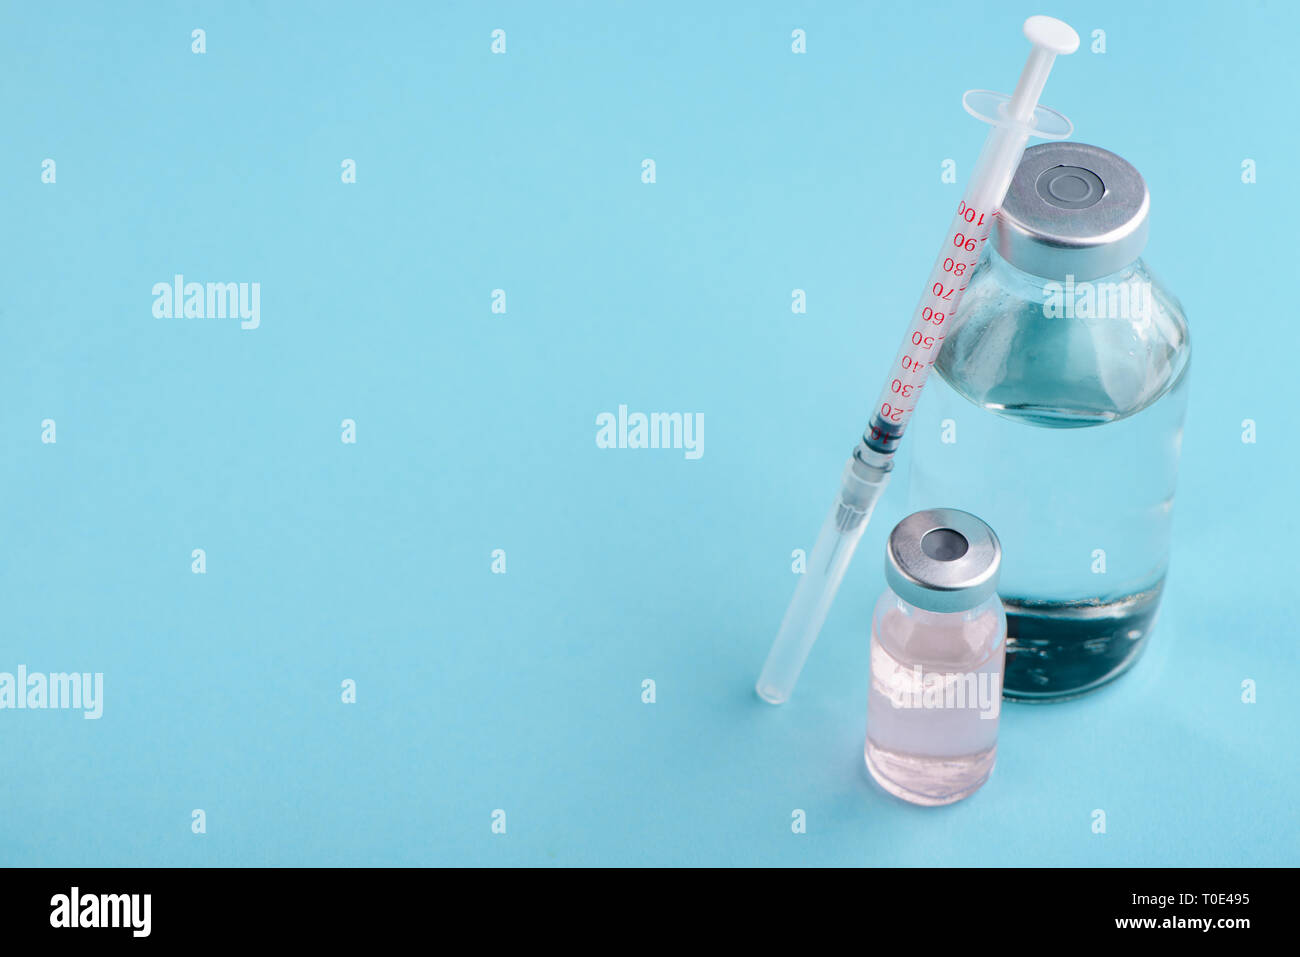 Vial, syringe and bottle Stock Photo